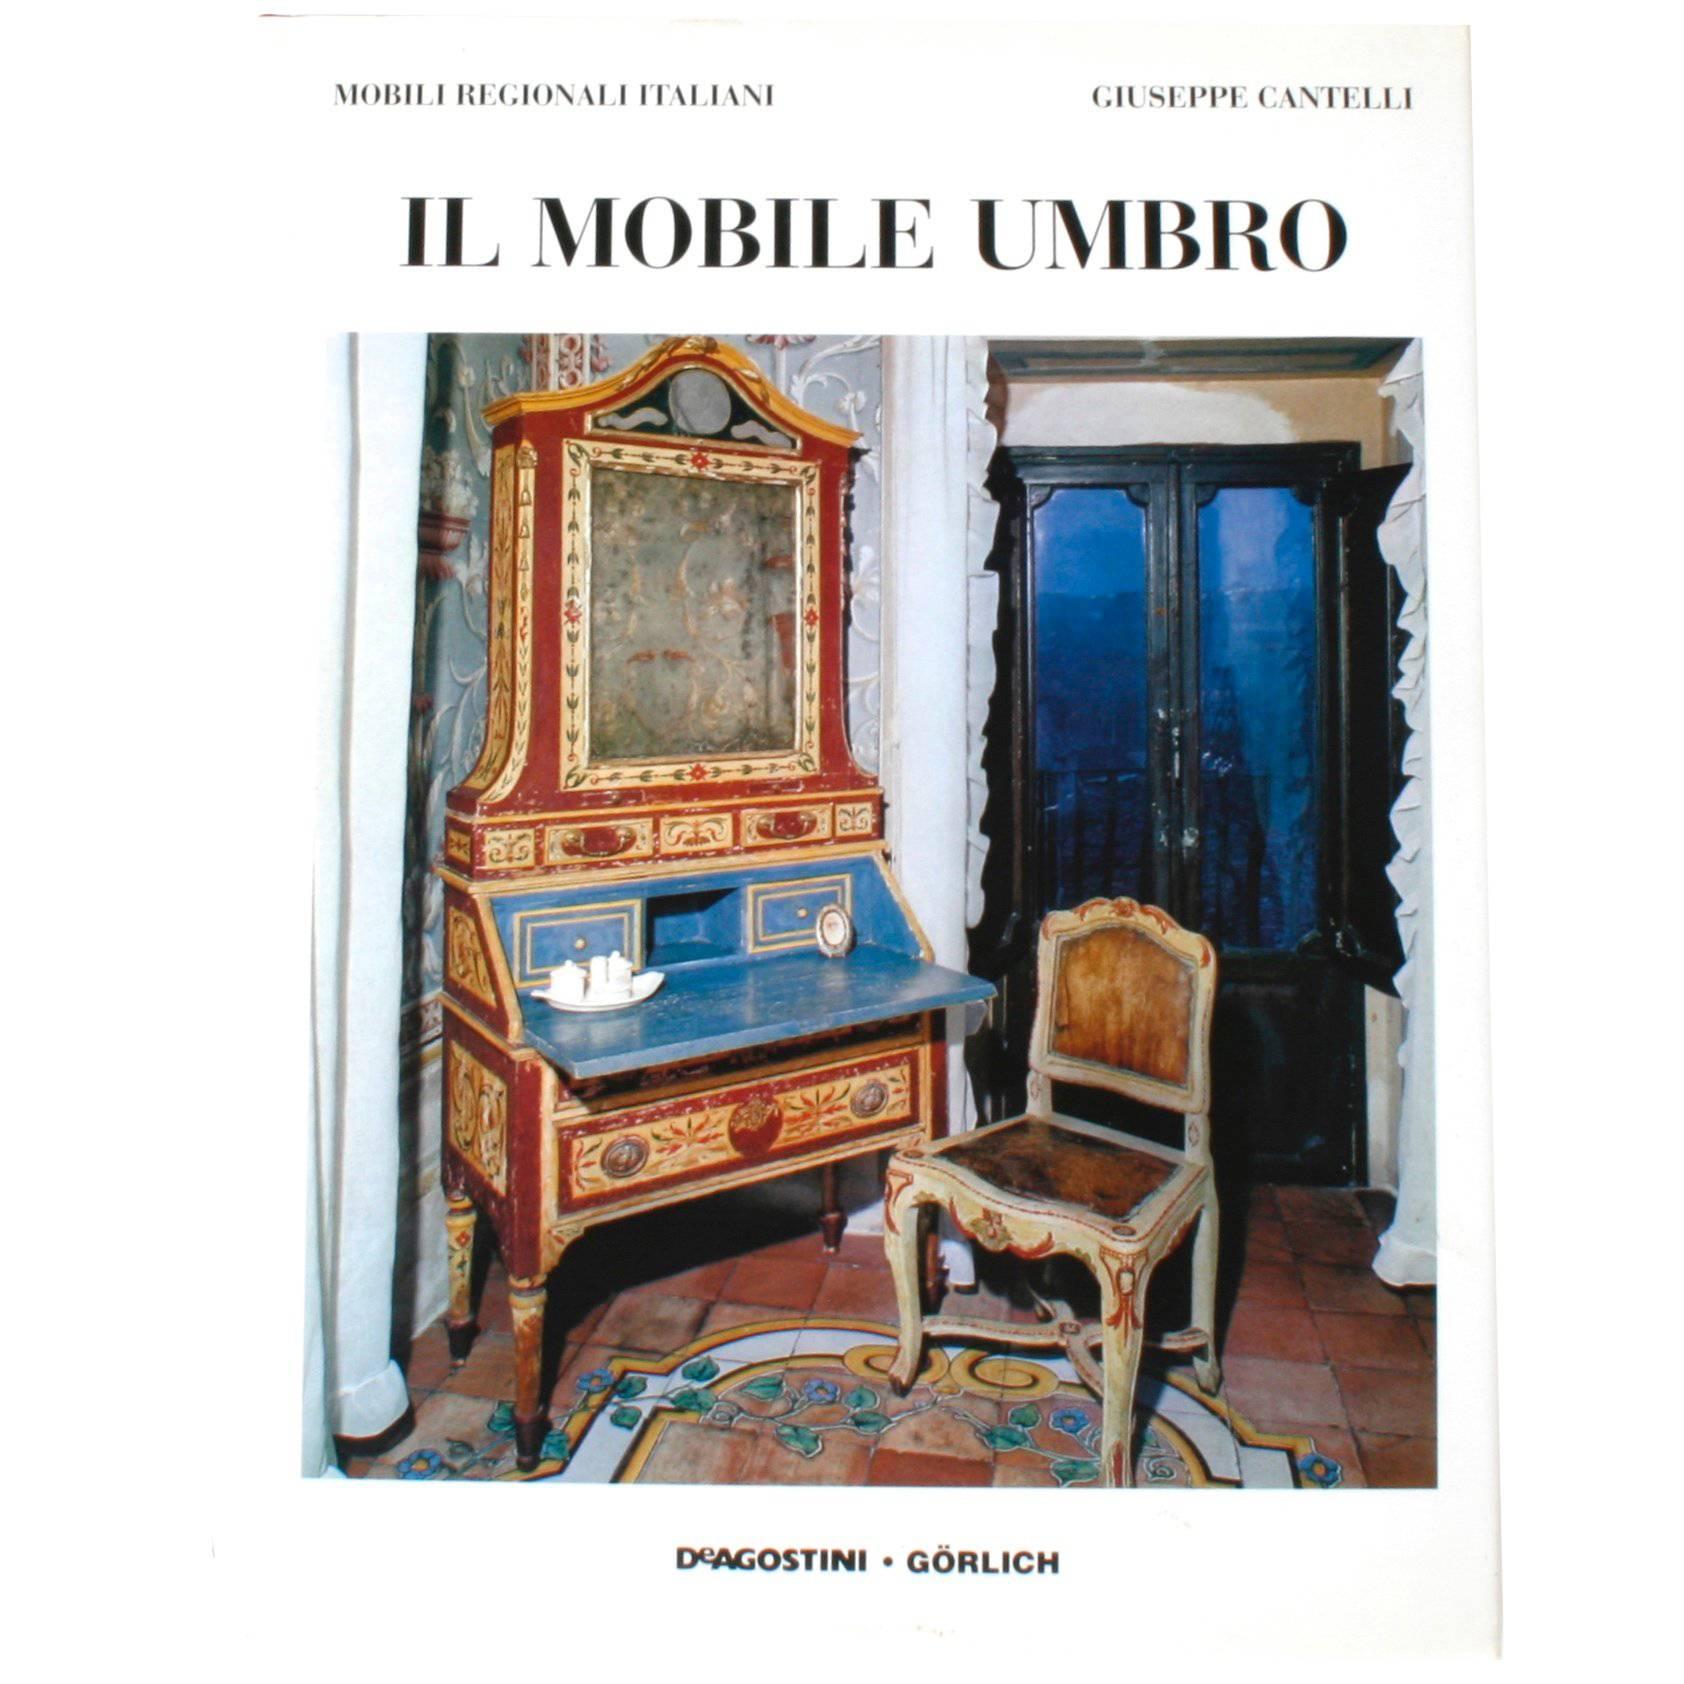 Il Mobile Umbro by Giuseppe Cantelli